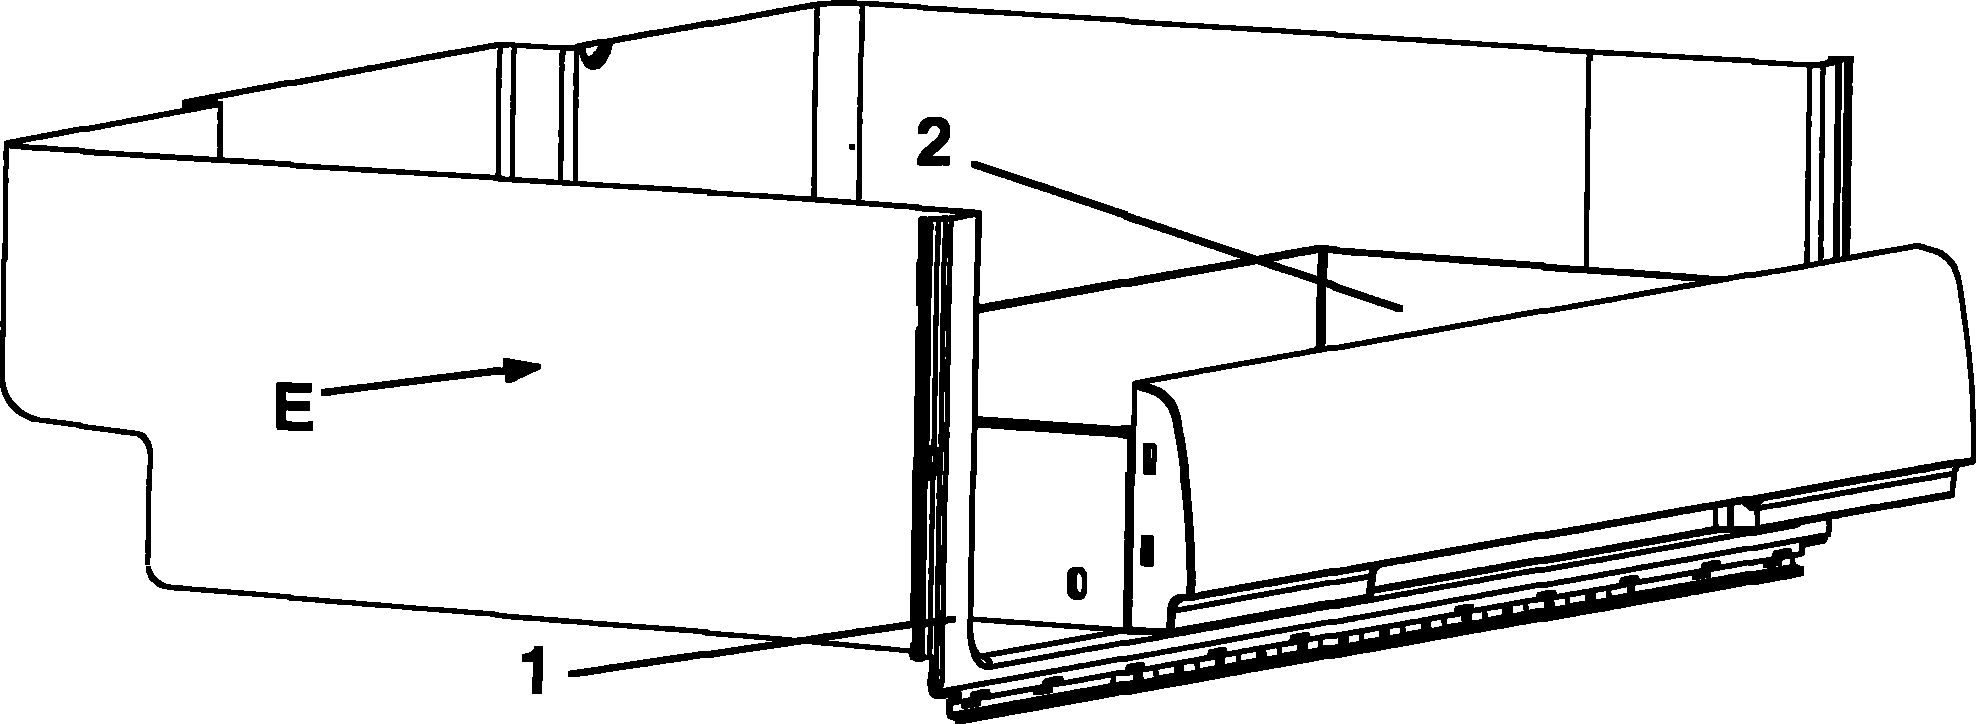 Sliding rail system for refrigerator drawer